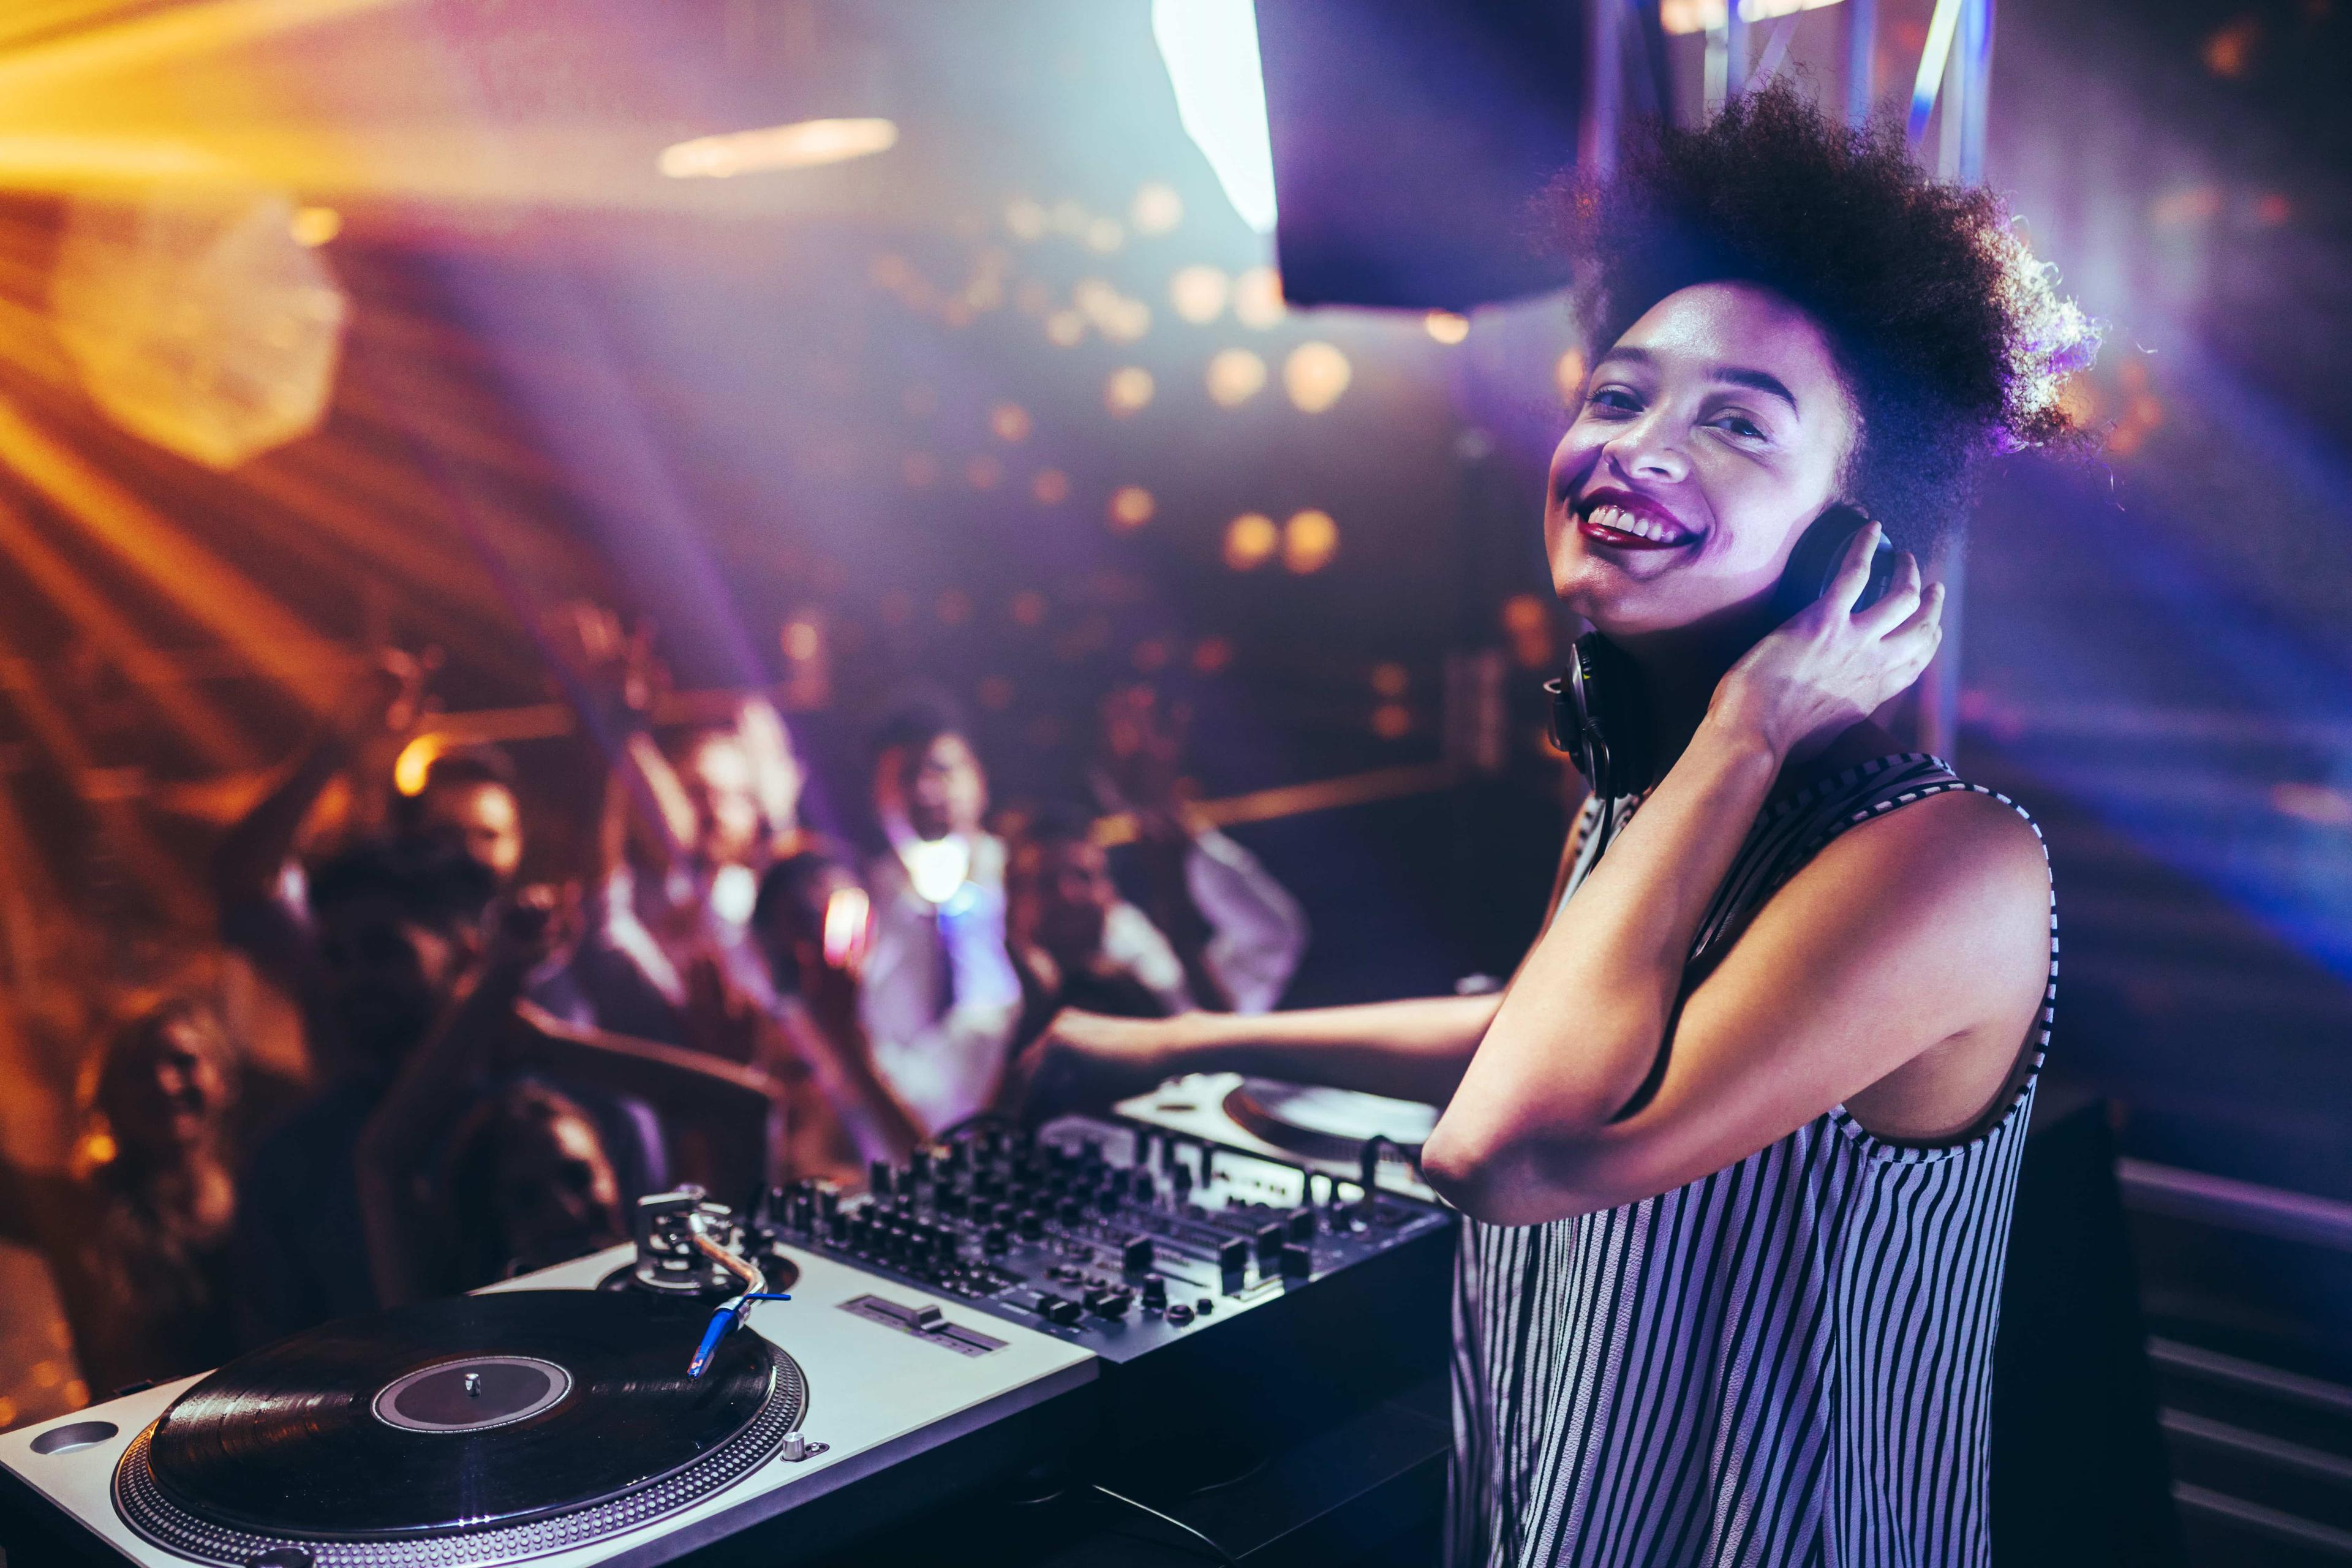 DUBAINIGHT GUIDE: CHECK OUT TOP 3 DJ NIGHTS IN DUBAI!